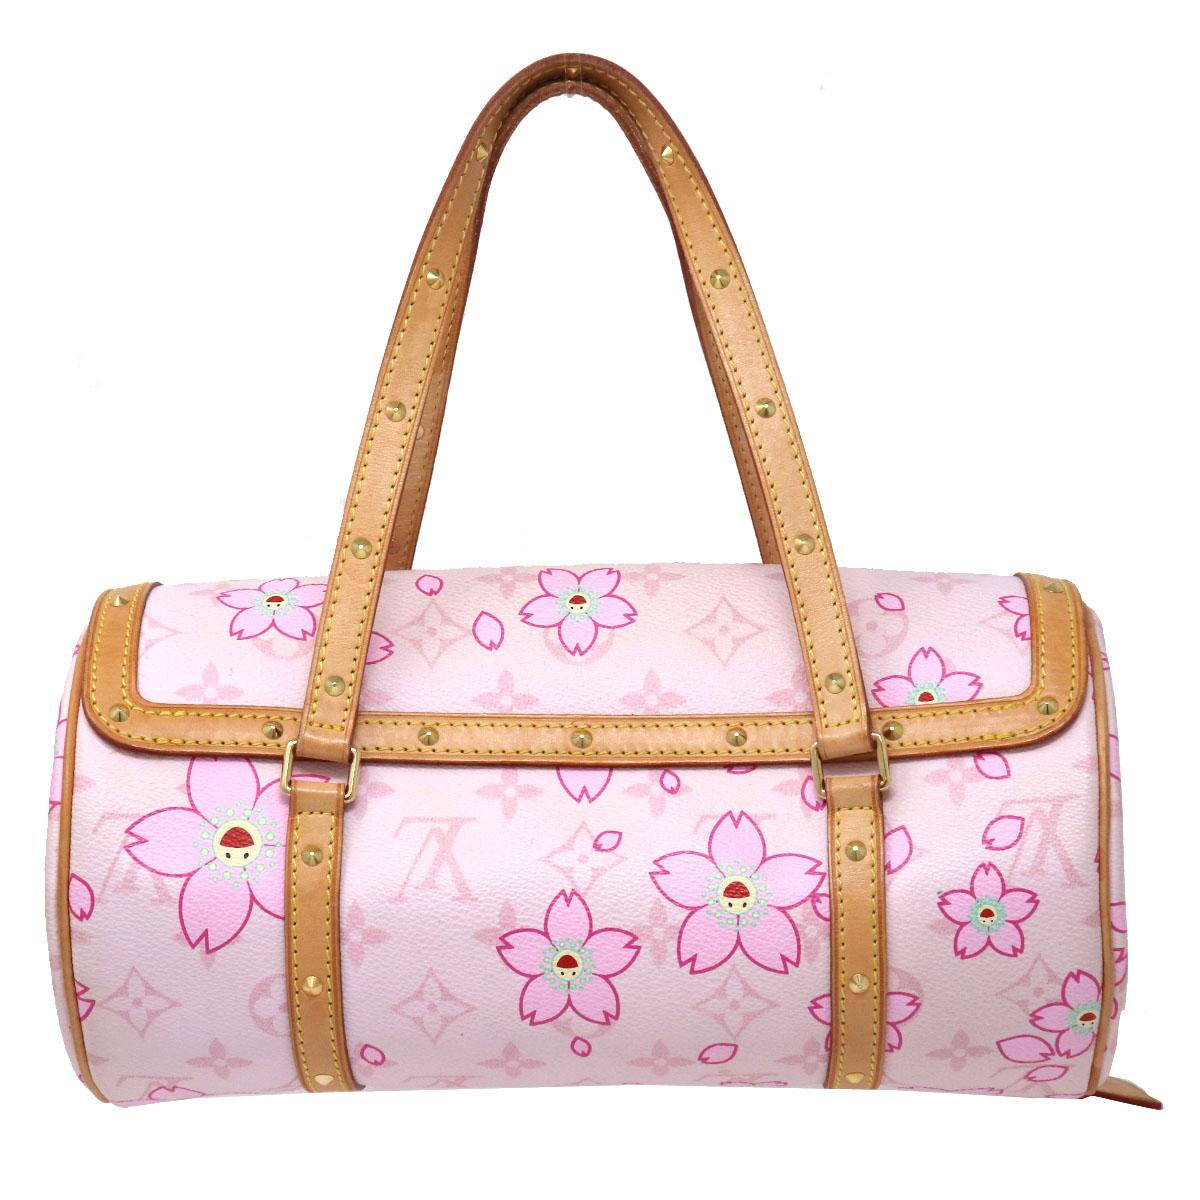 Company-Louis Vuitton
Model- Papillon Monogram Cherry Blossom Pink Satchel
Color-Pink
Date Code-SD0059
Material-Monogram Canvas with flowers
Measurements-10